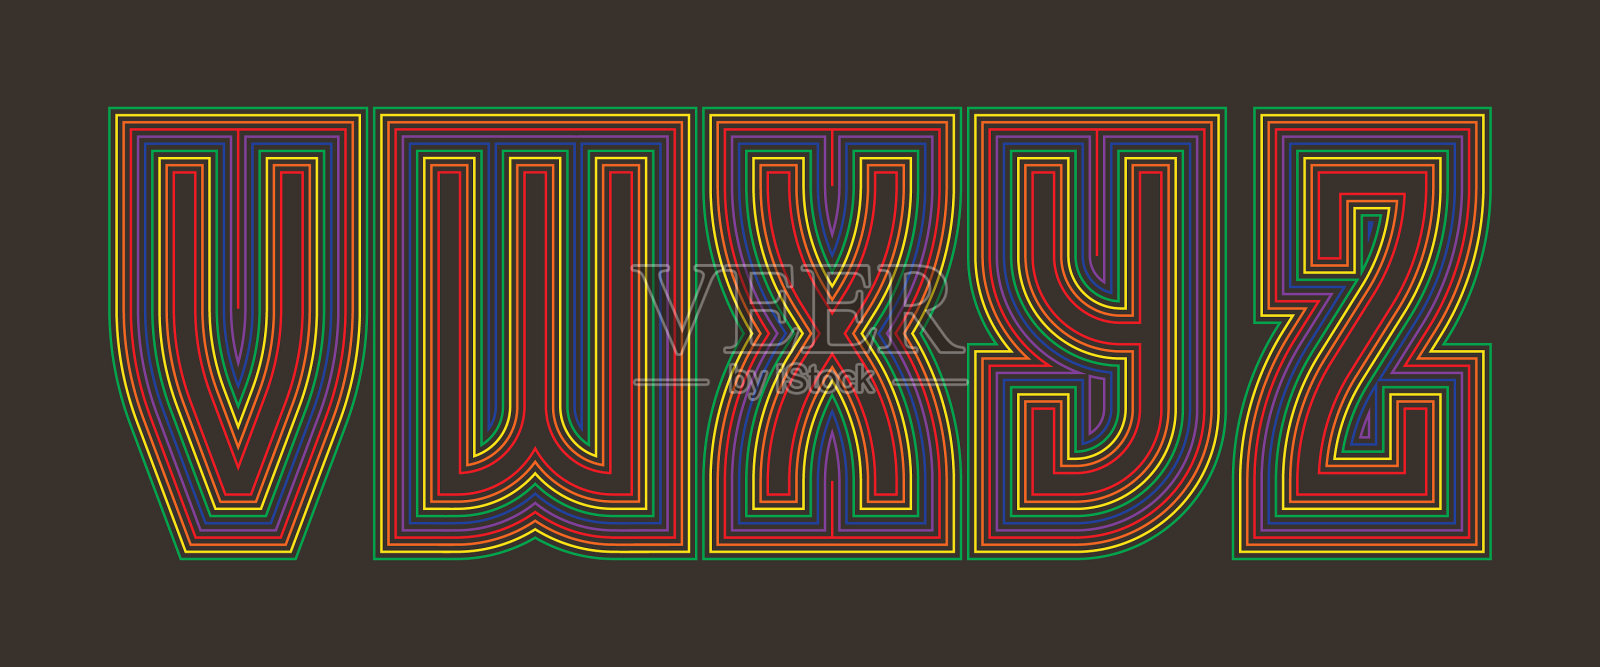 V w x y z多色线字母隔离插画图片素材